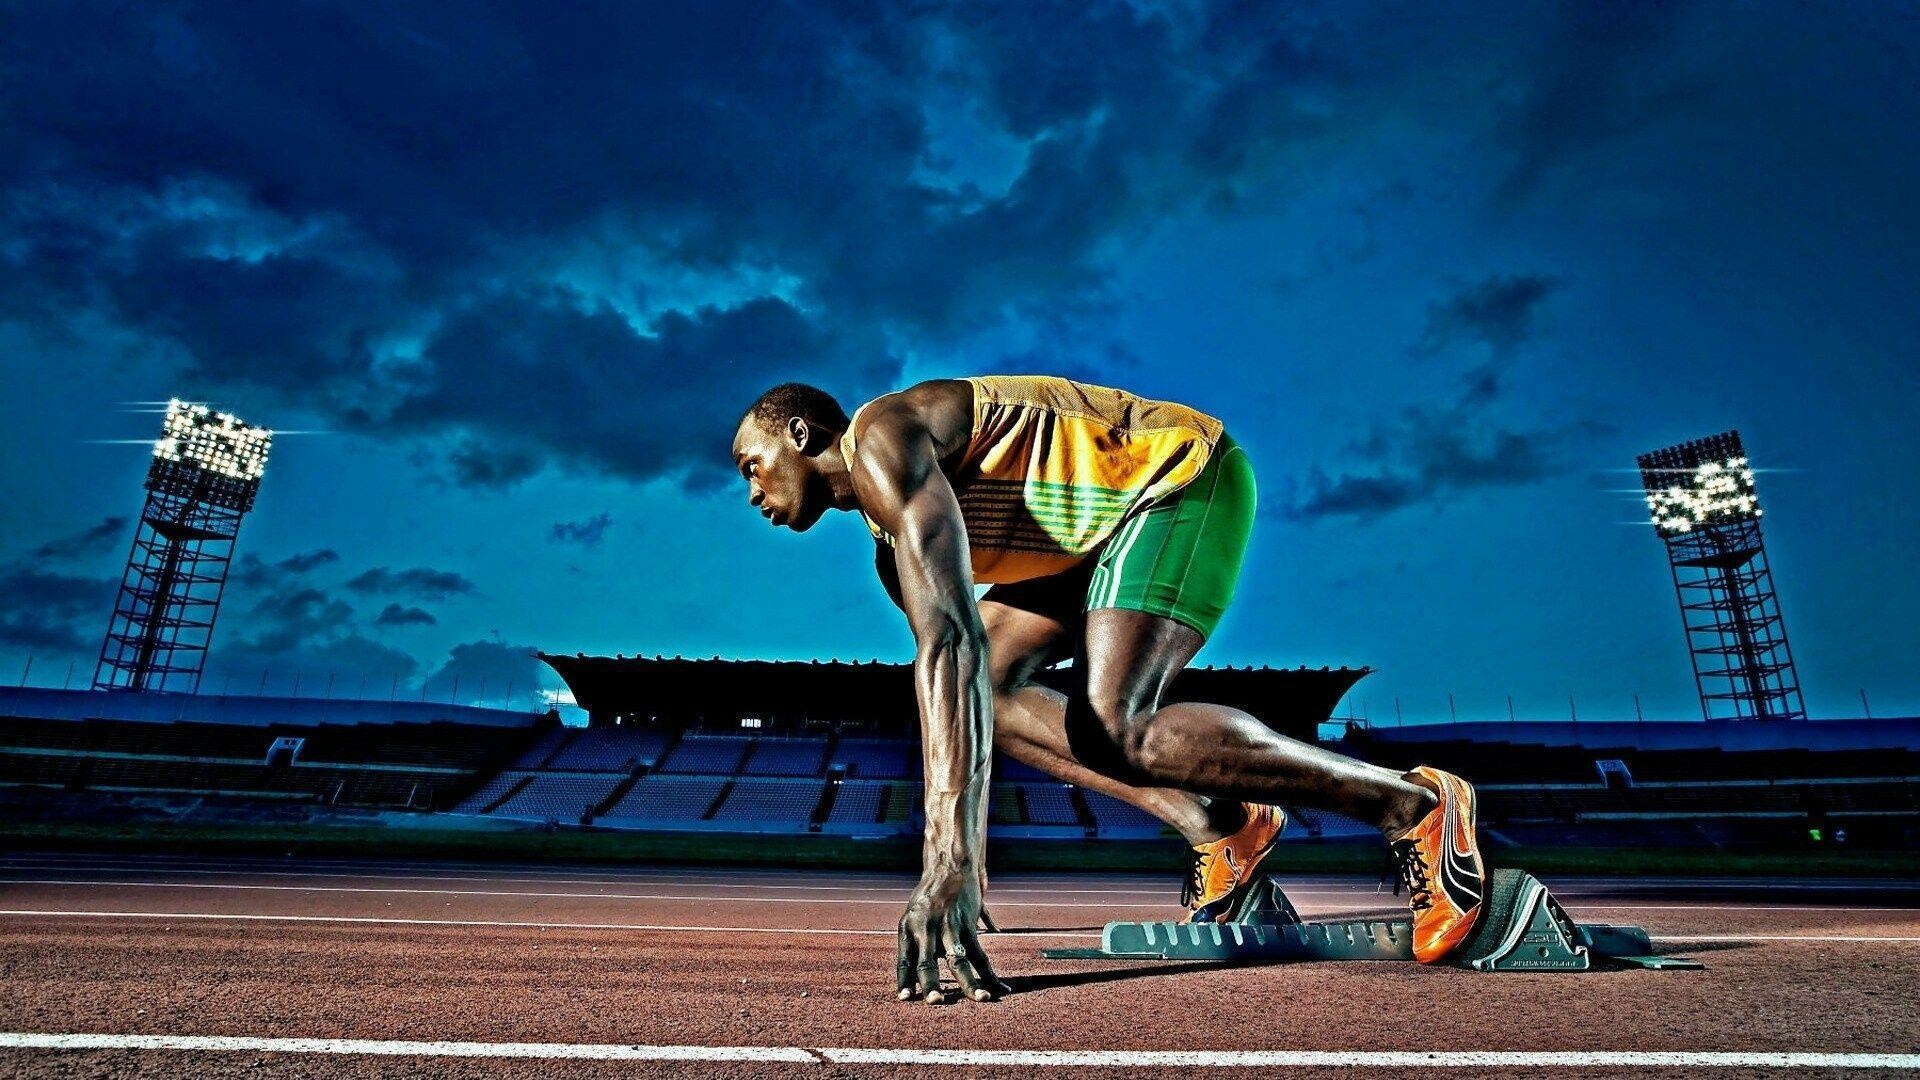 Athletics passion, Competitive spirit, Adrenaline rush, Olympic dreams, 1920x1080 Full HD Desktop